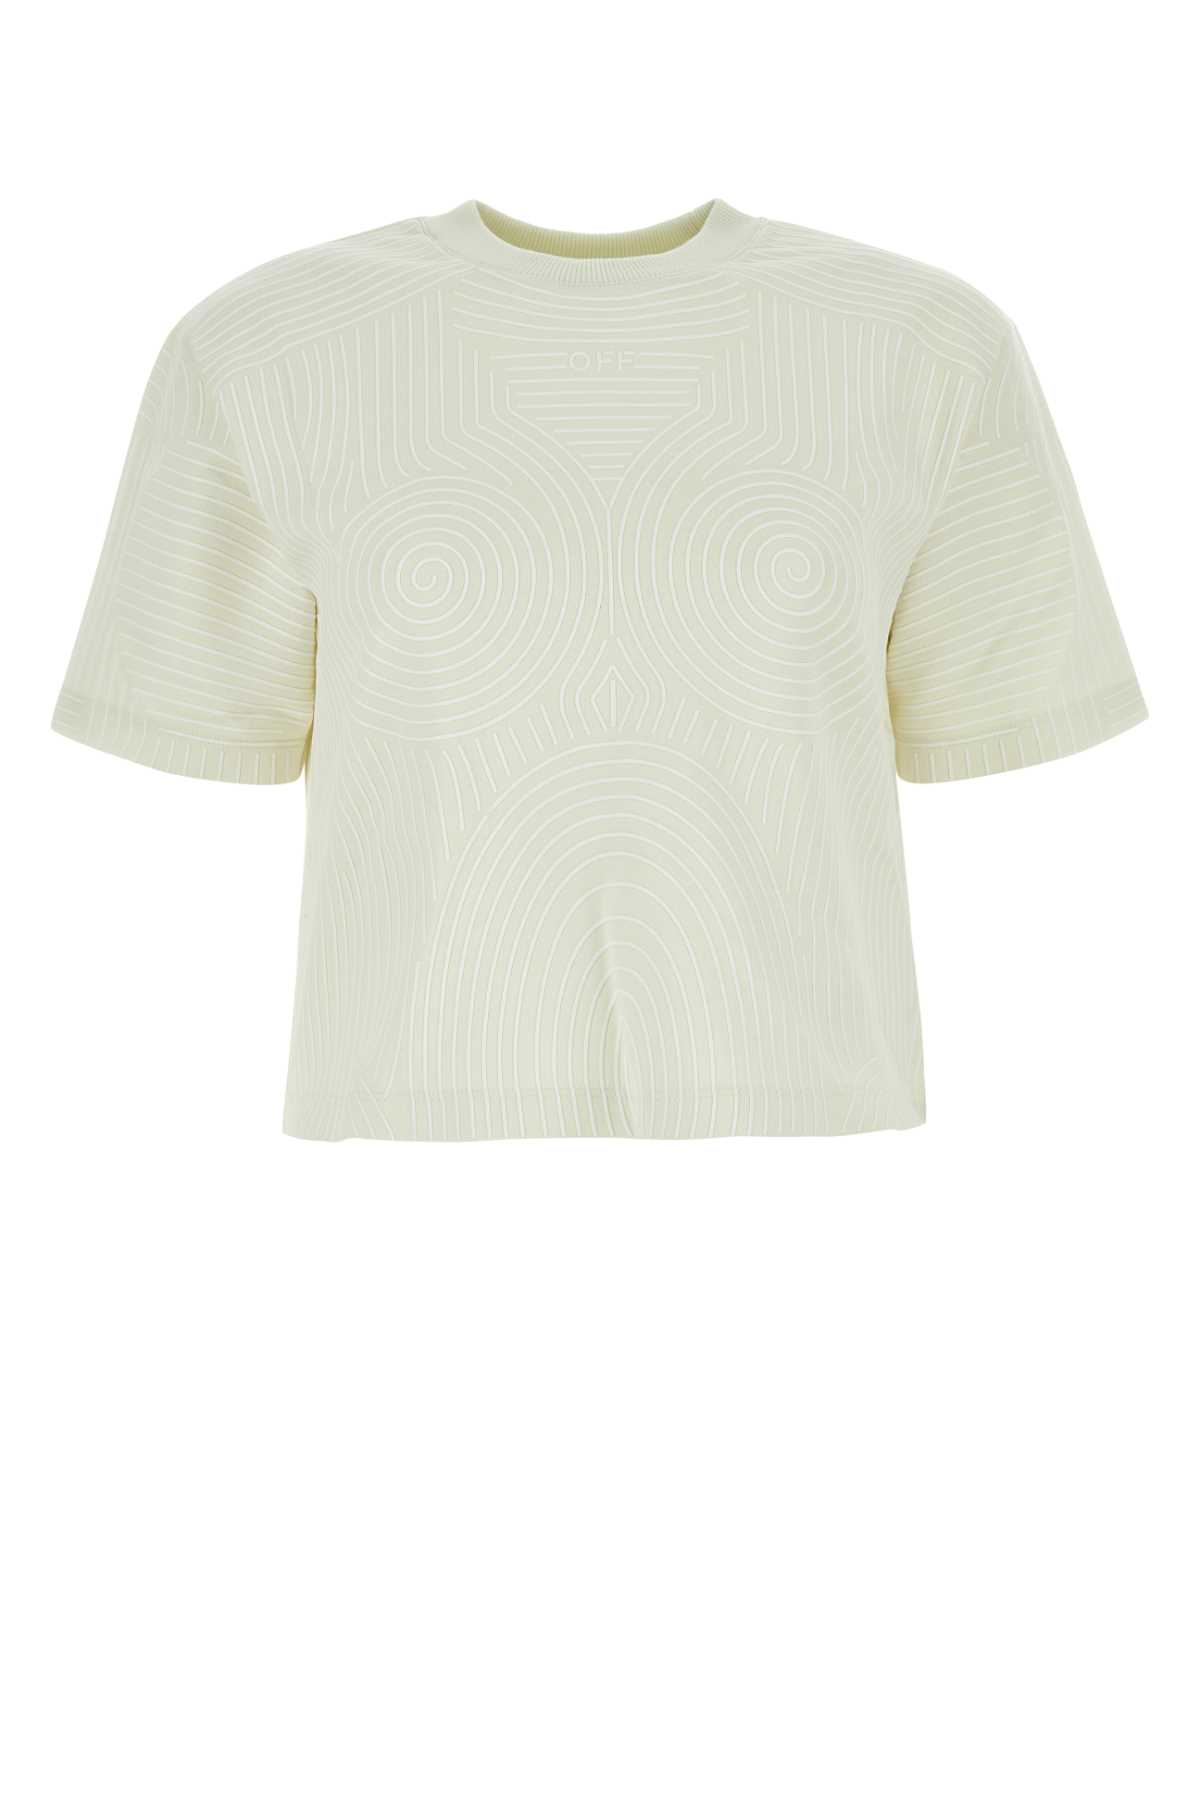 Ivory Cotton Oversize T-shirt